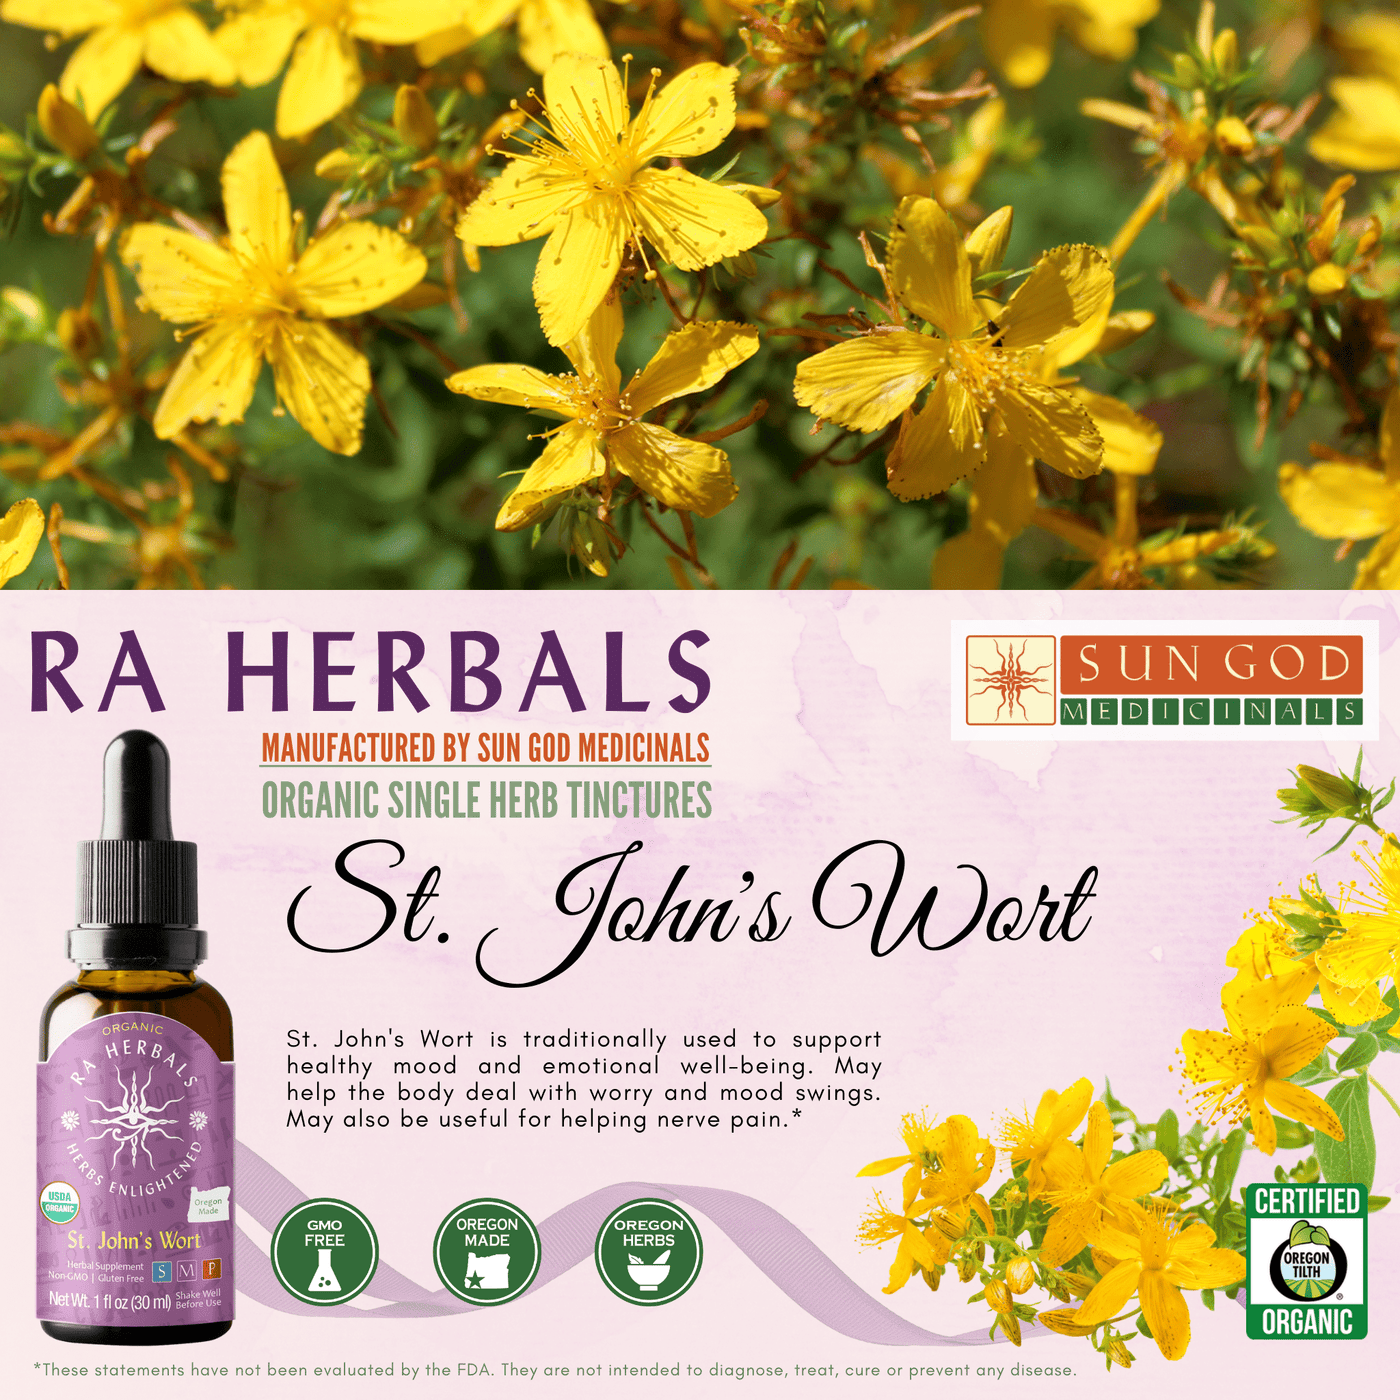 Ra Herbals Certified Organic St. John's Wort Tincture - Sun God Medicinals